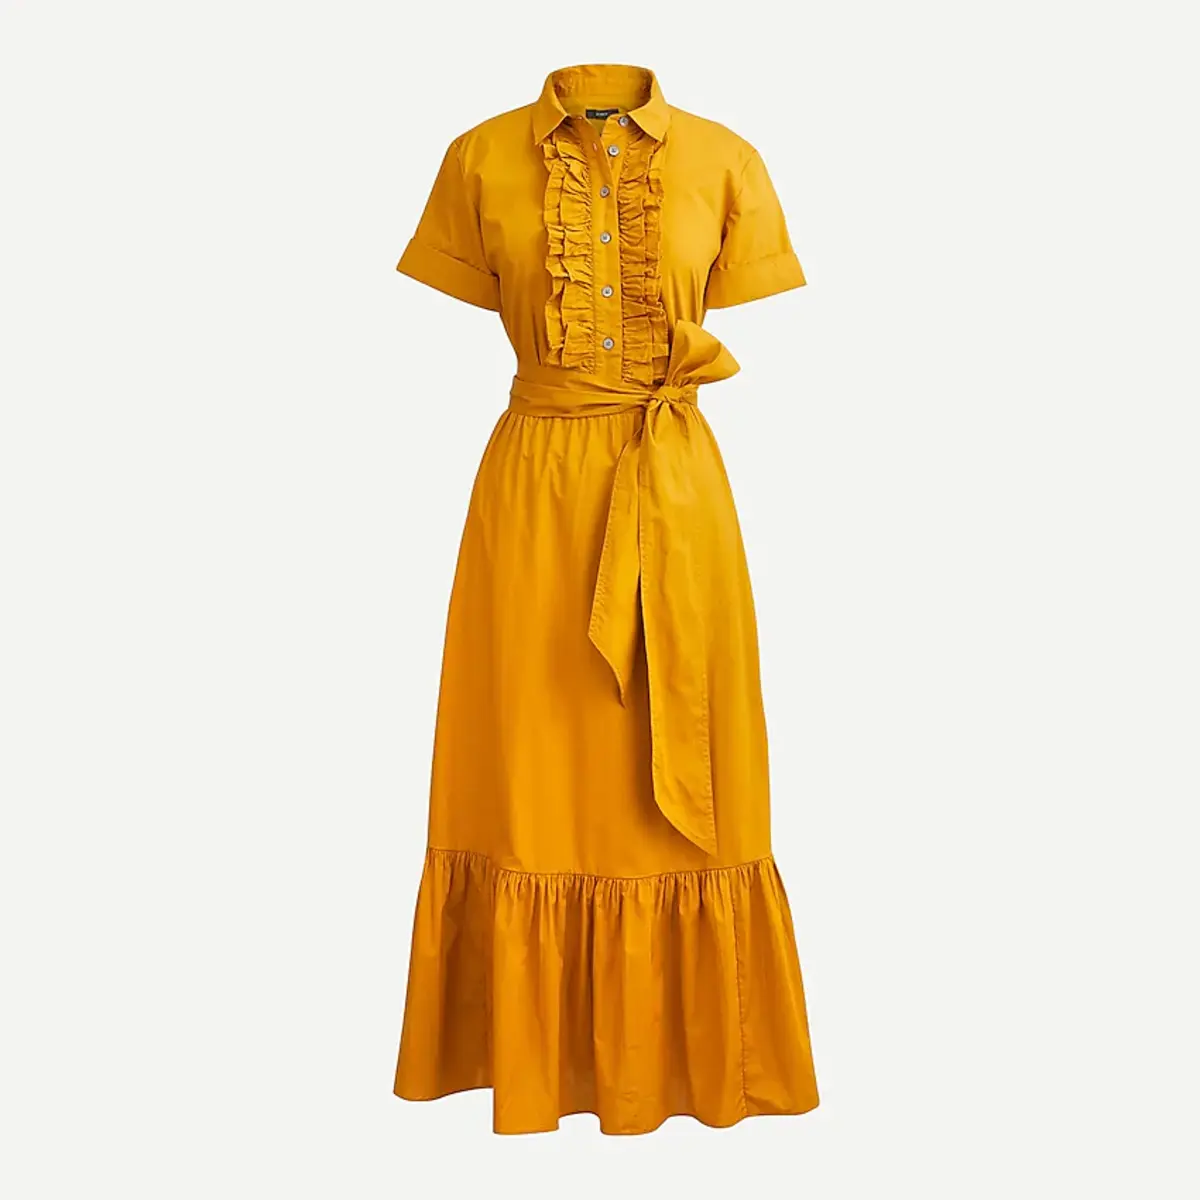 J.Crew dress in marigold and bright orange